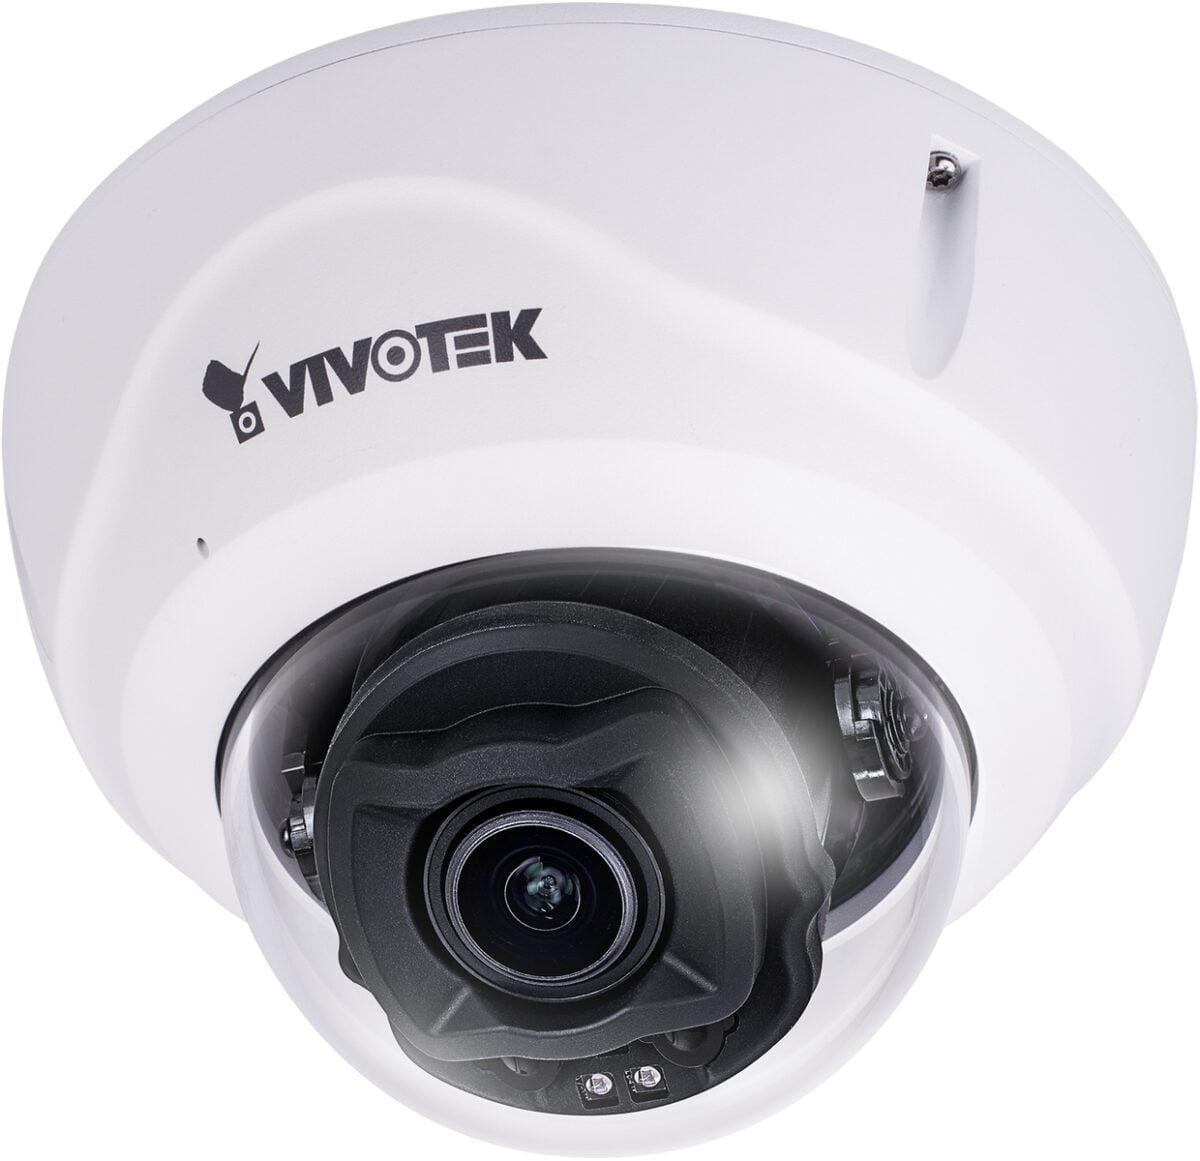 Vivotek FD9387-HTV-A 5MP Outdoor Dome IP camera with motorized Vari-Focal Lens Type